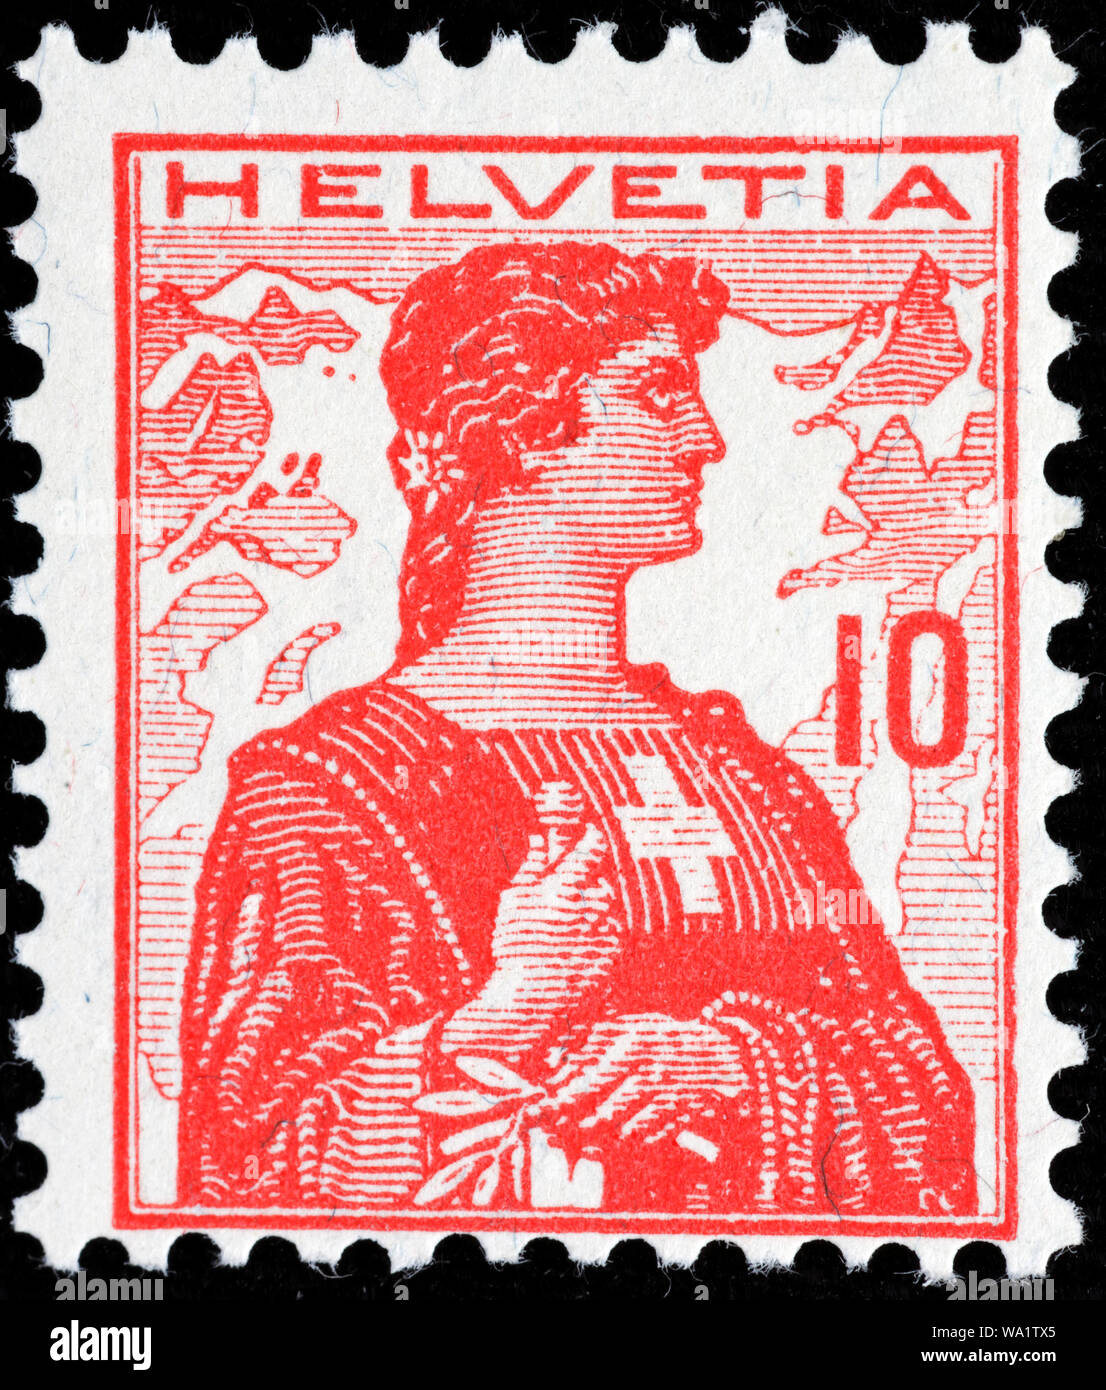 Helvetia, francobollo, Svizzera, 1909 Foto Stock